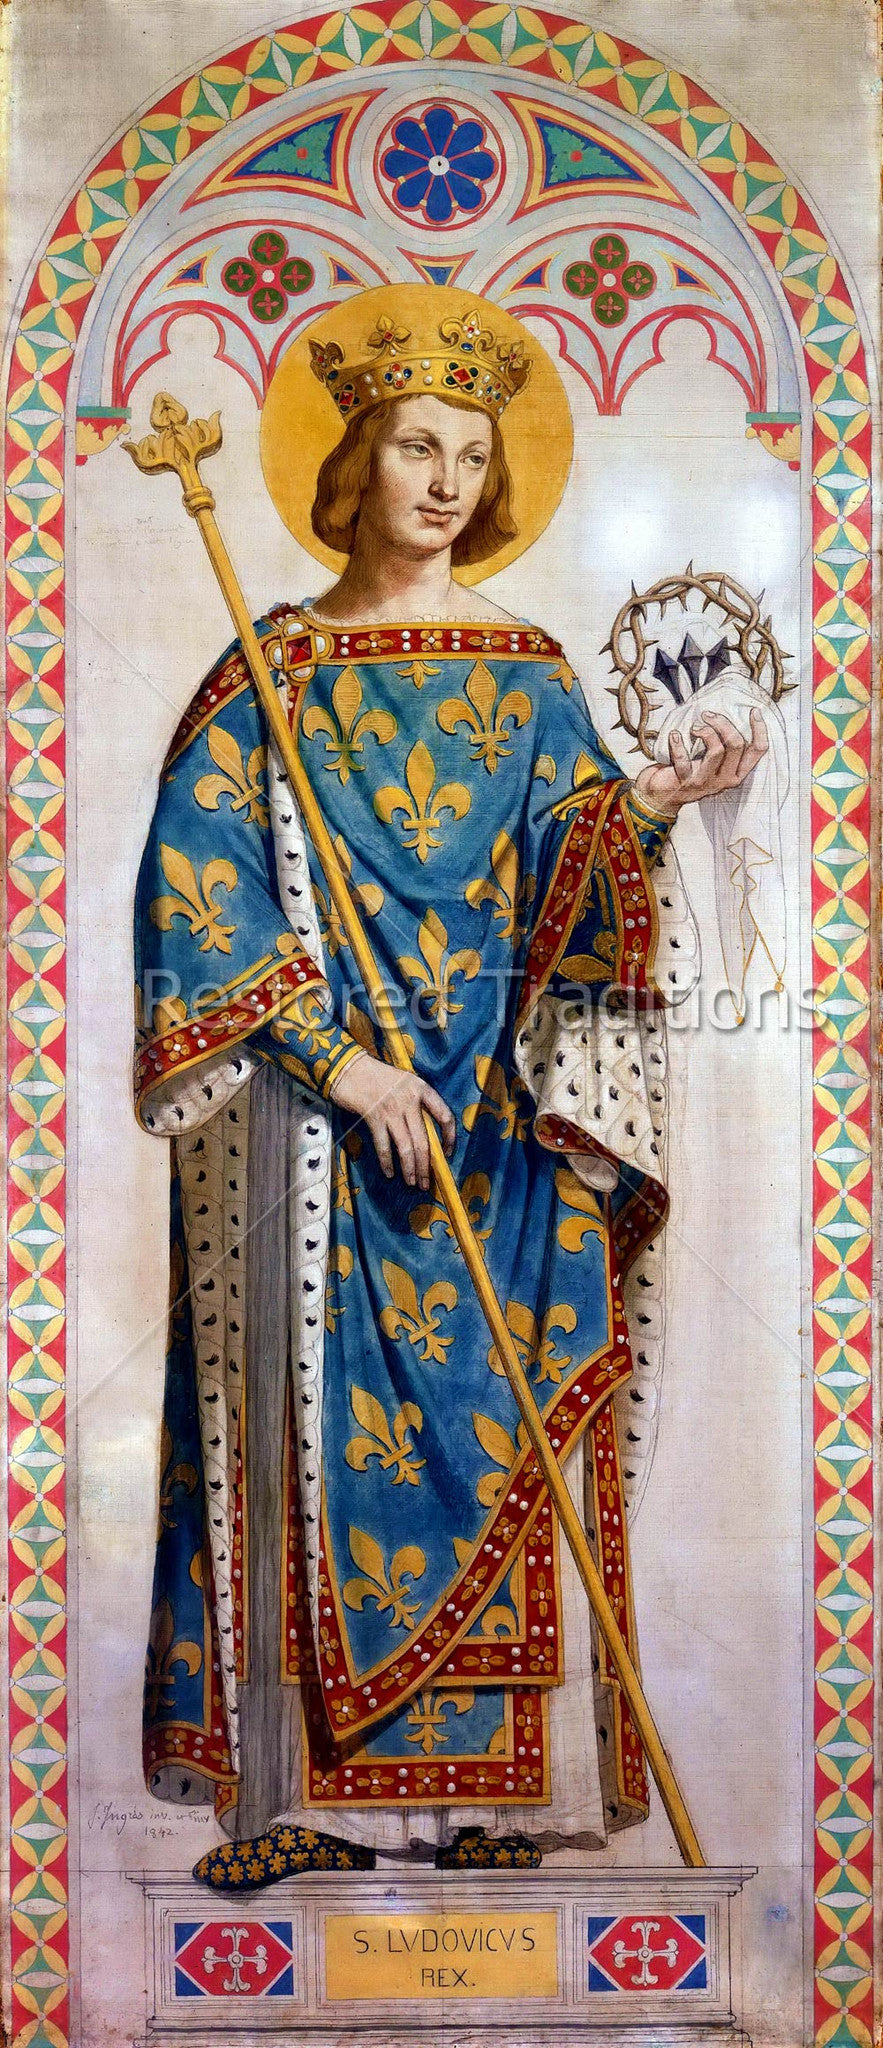 Image File: St. Louis King of France, Artist Ingres | Restored Traditions